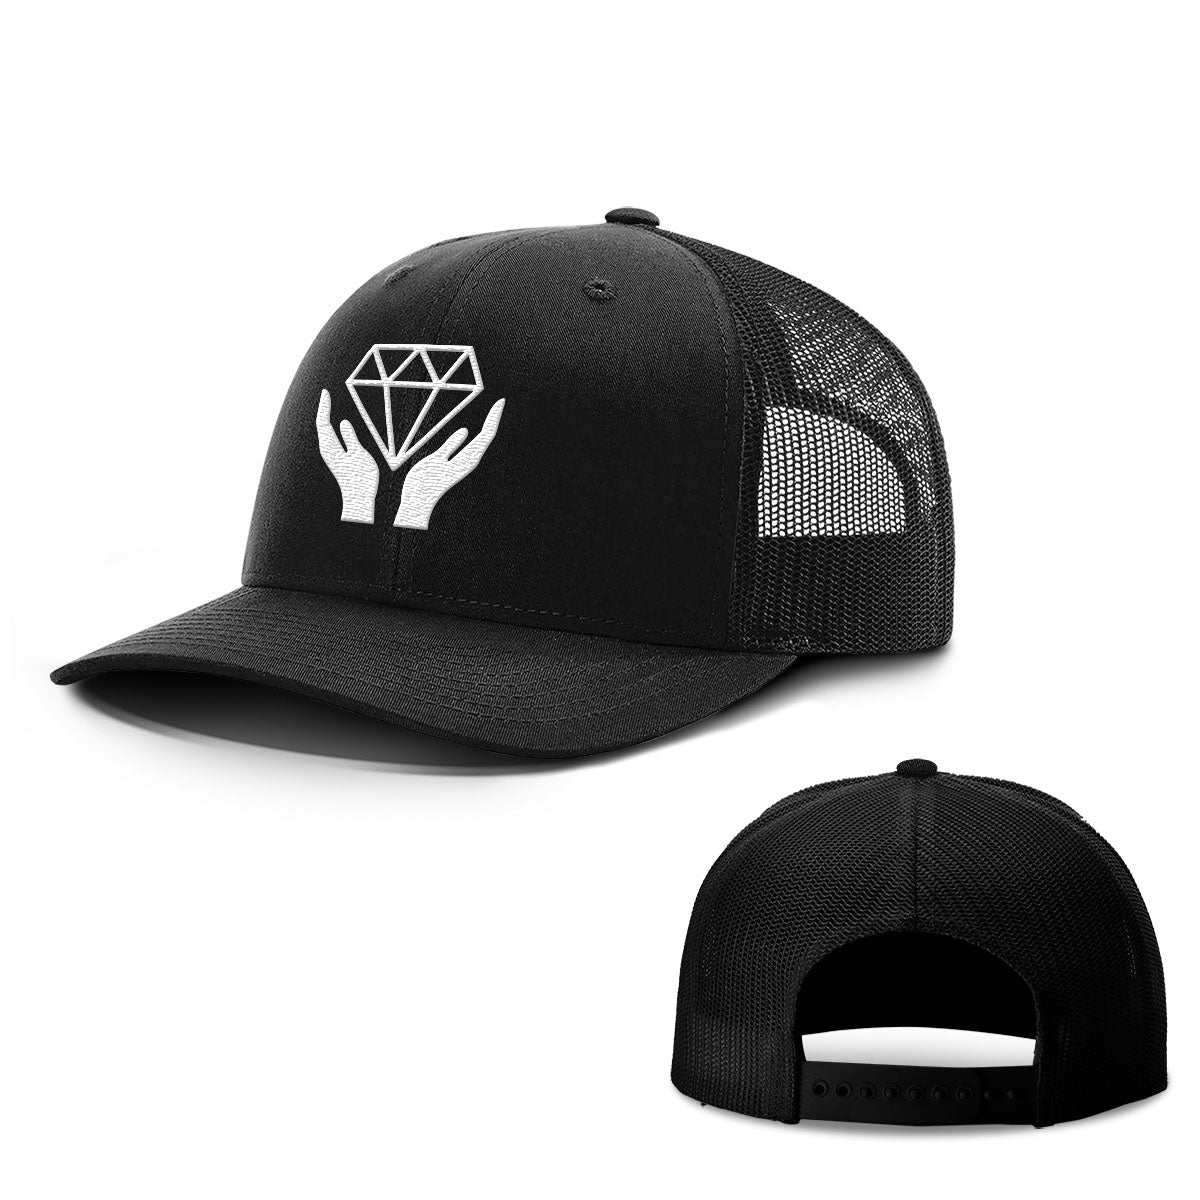 Diamond Hands Hats - BustedTees.com